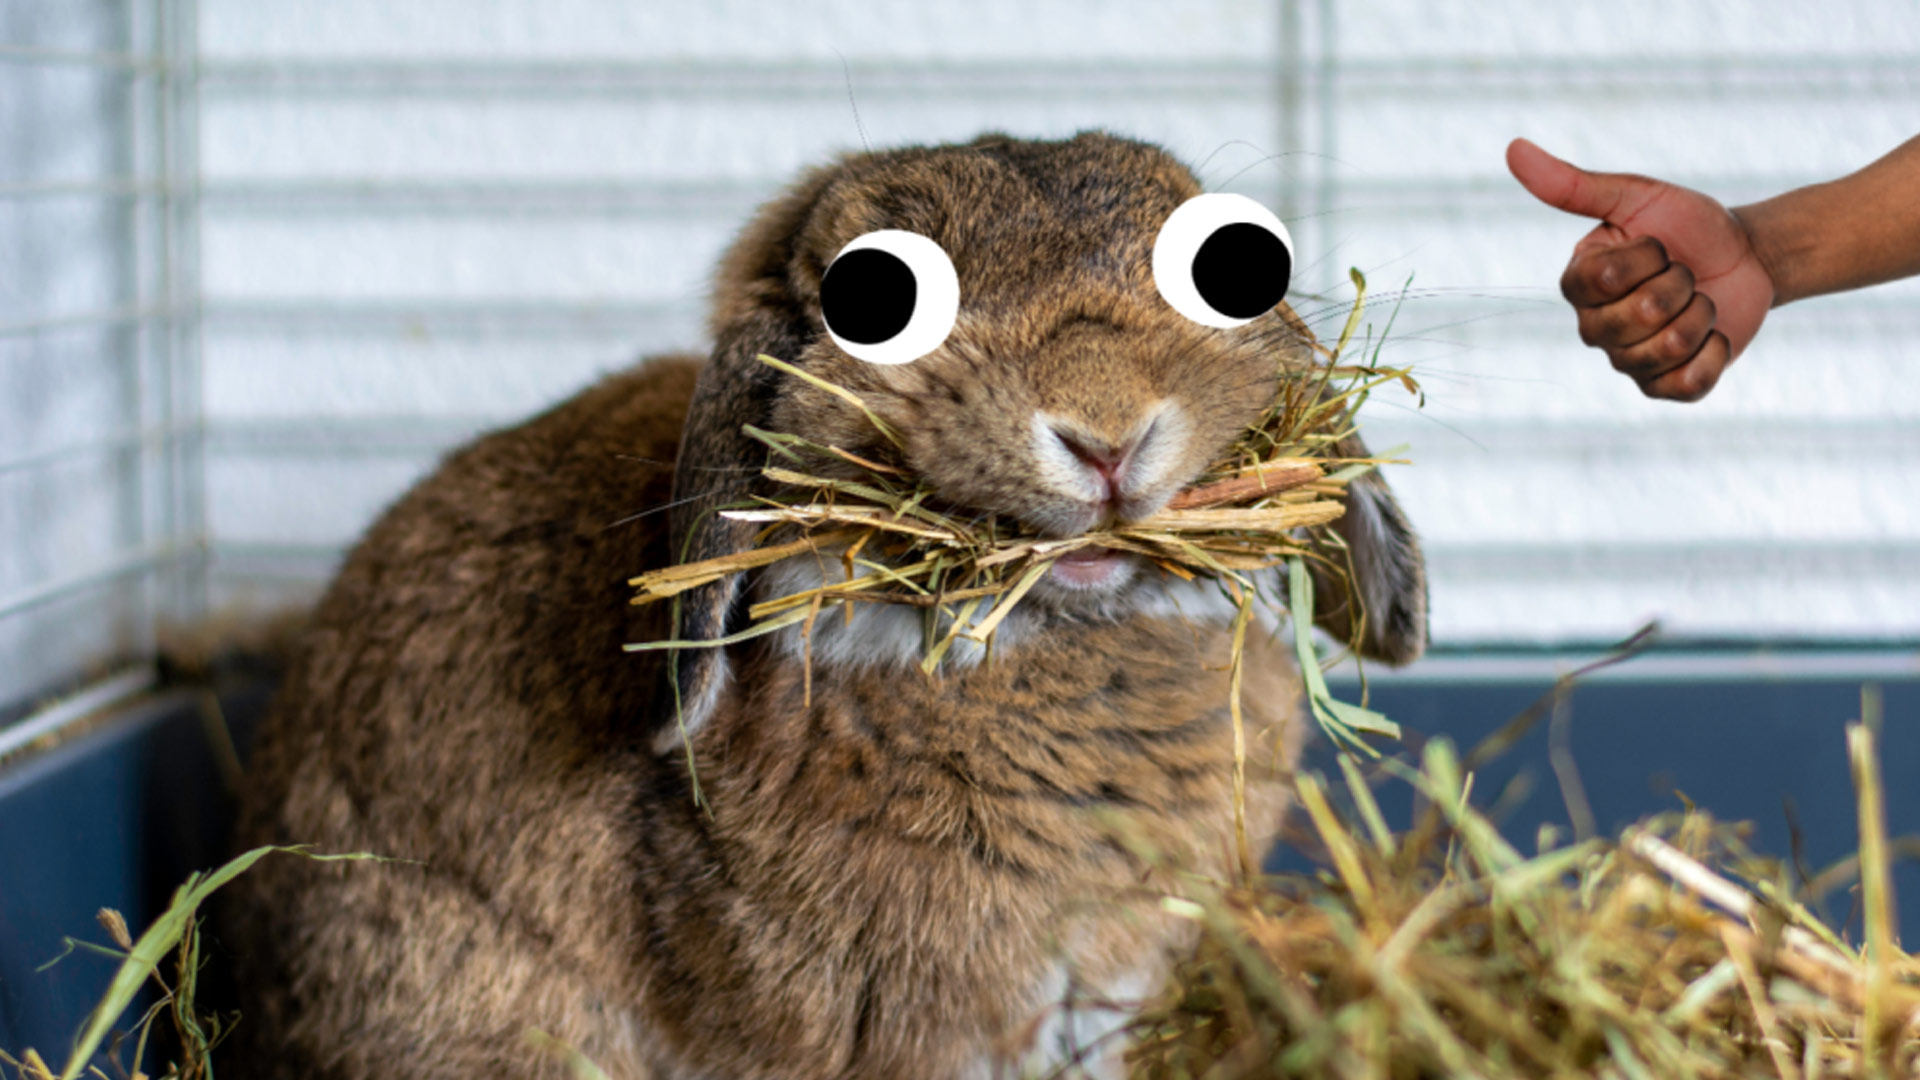 A happy rabbit eating hay